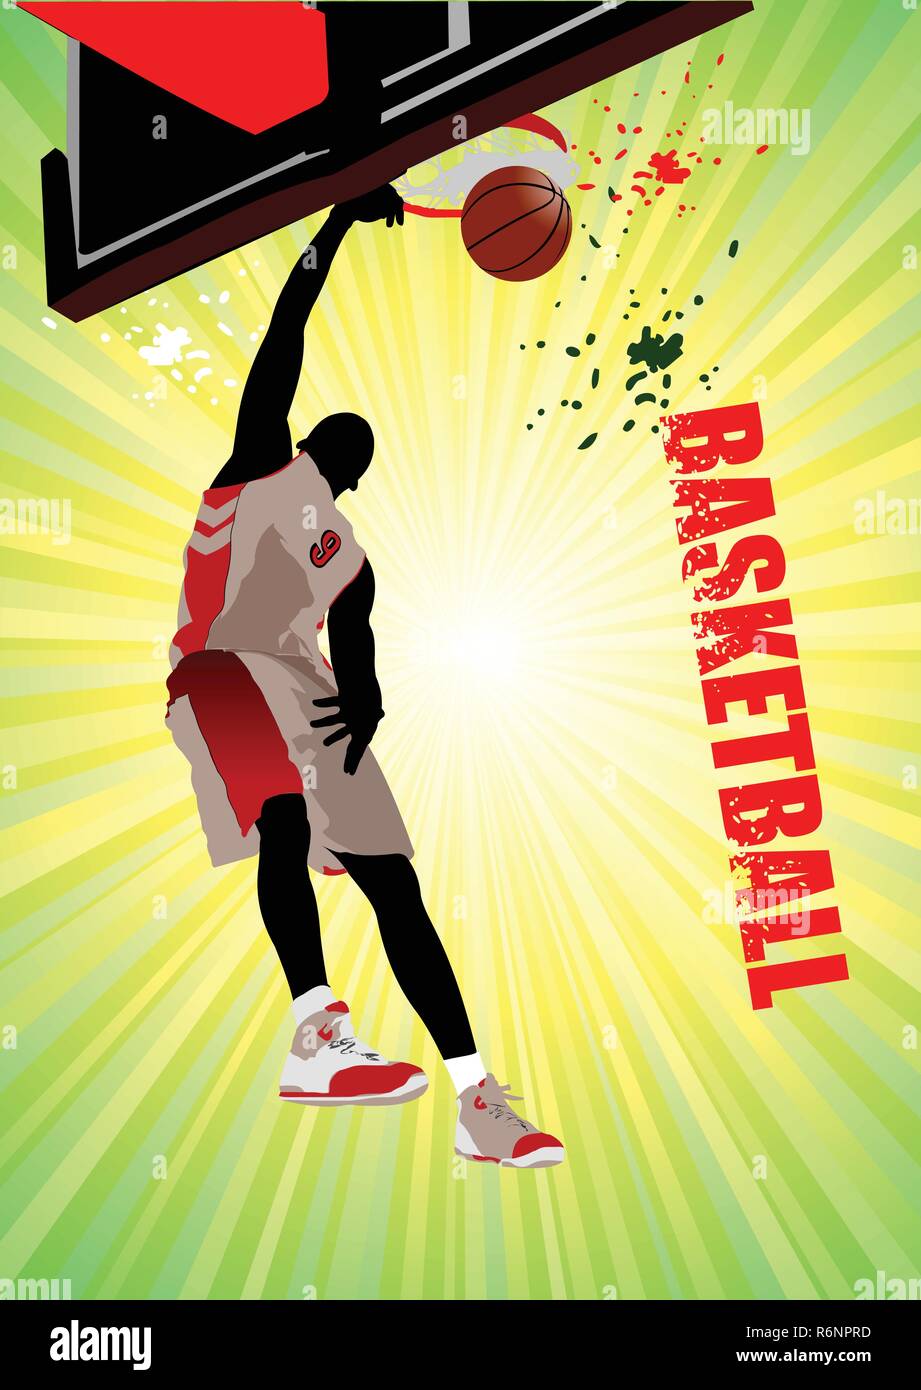 Poster Basketball player. Vector illustration. 